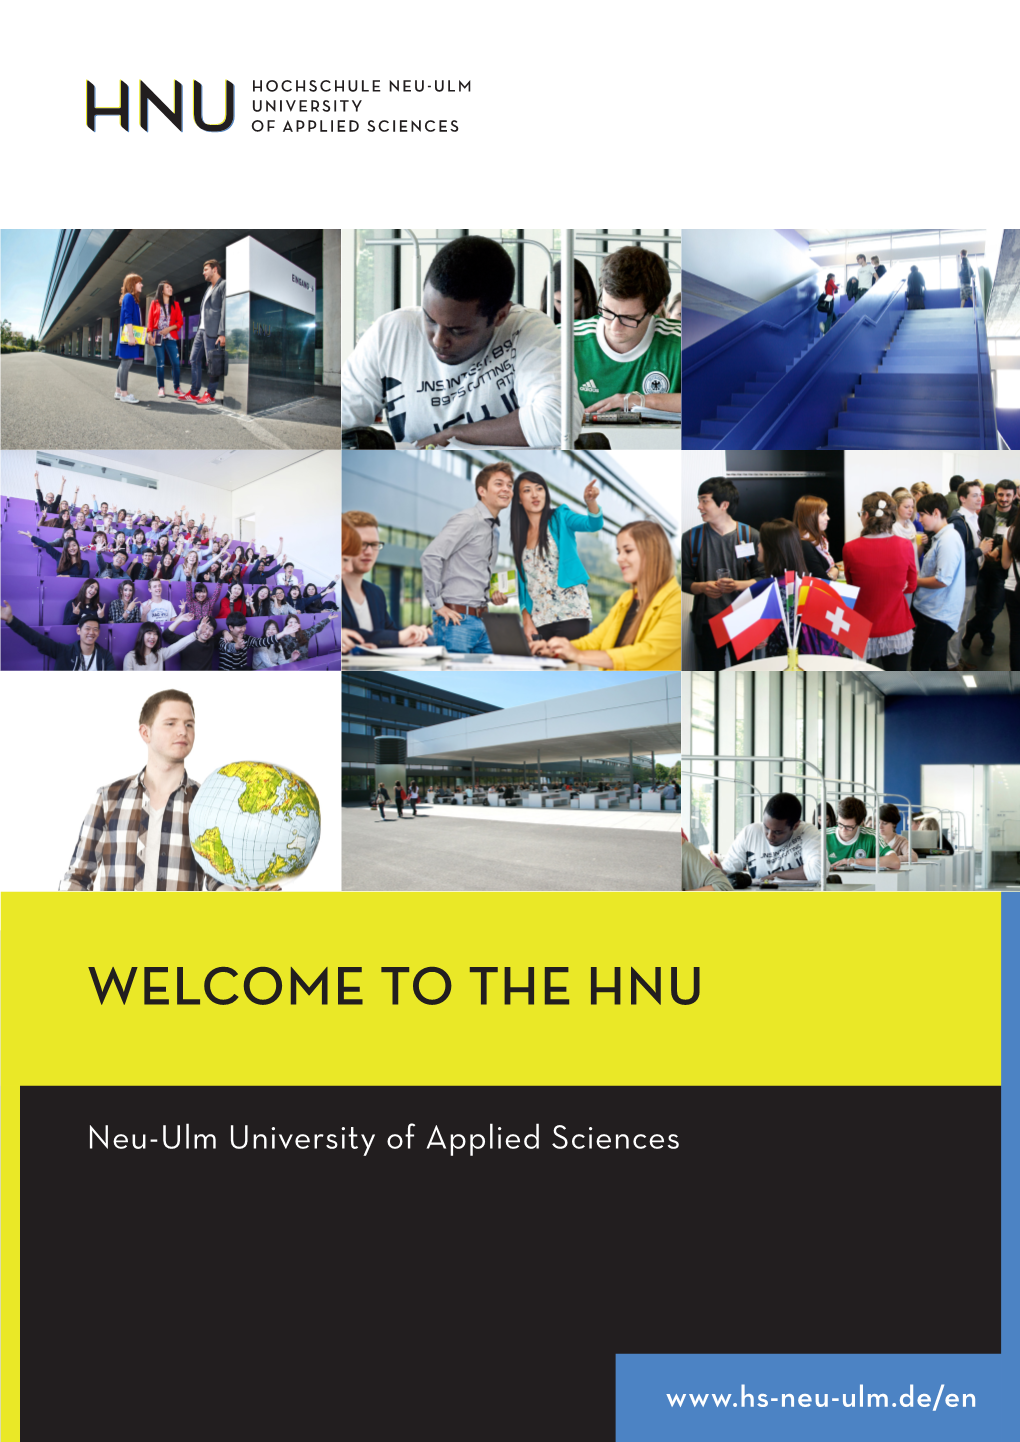 Brochure "Welcome to the HNU"